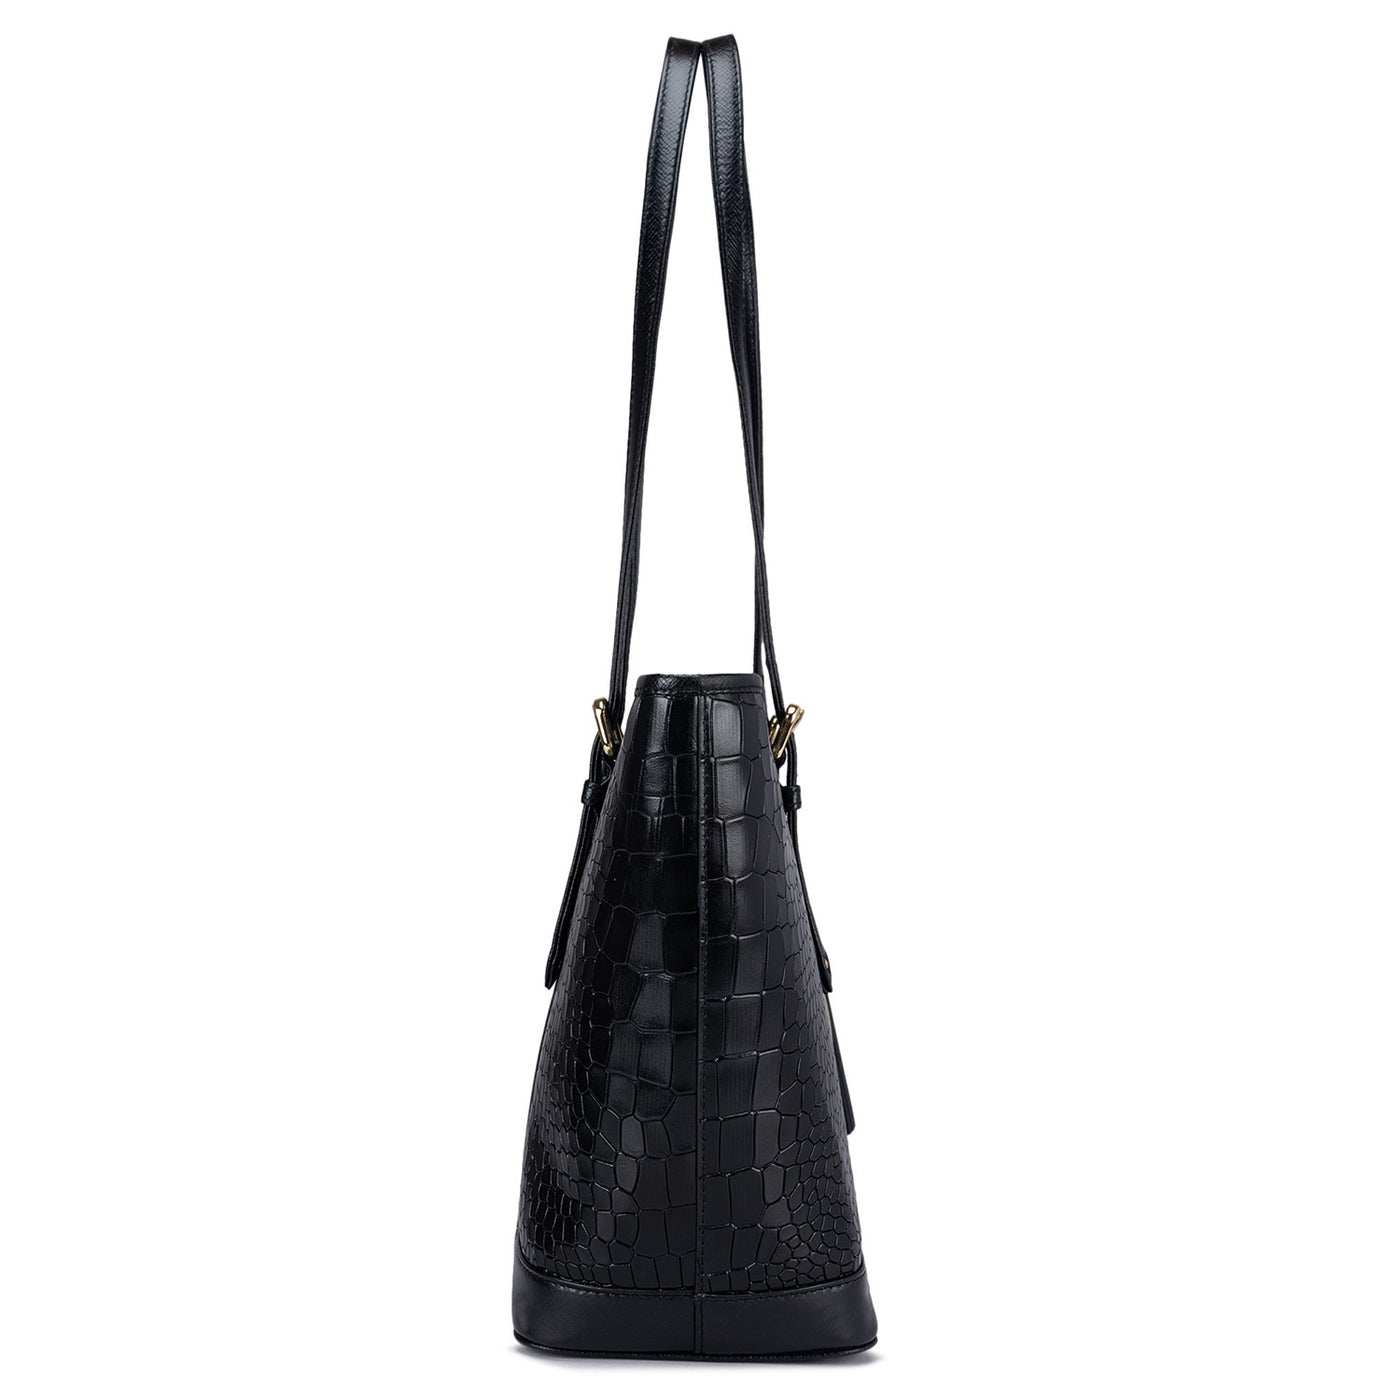 Medium Croco Leather Tote - Black